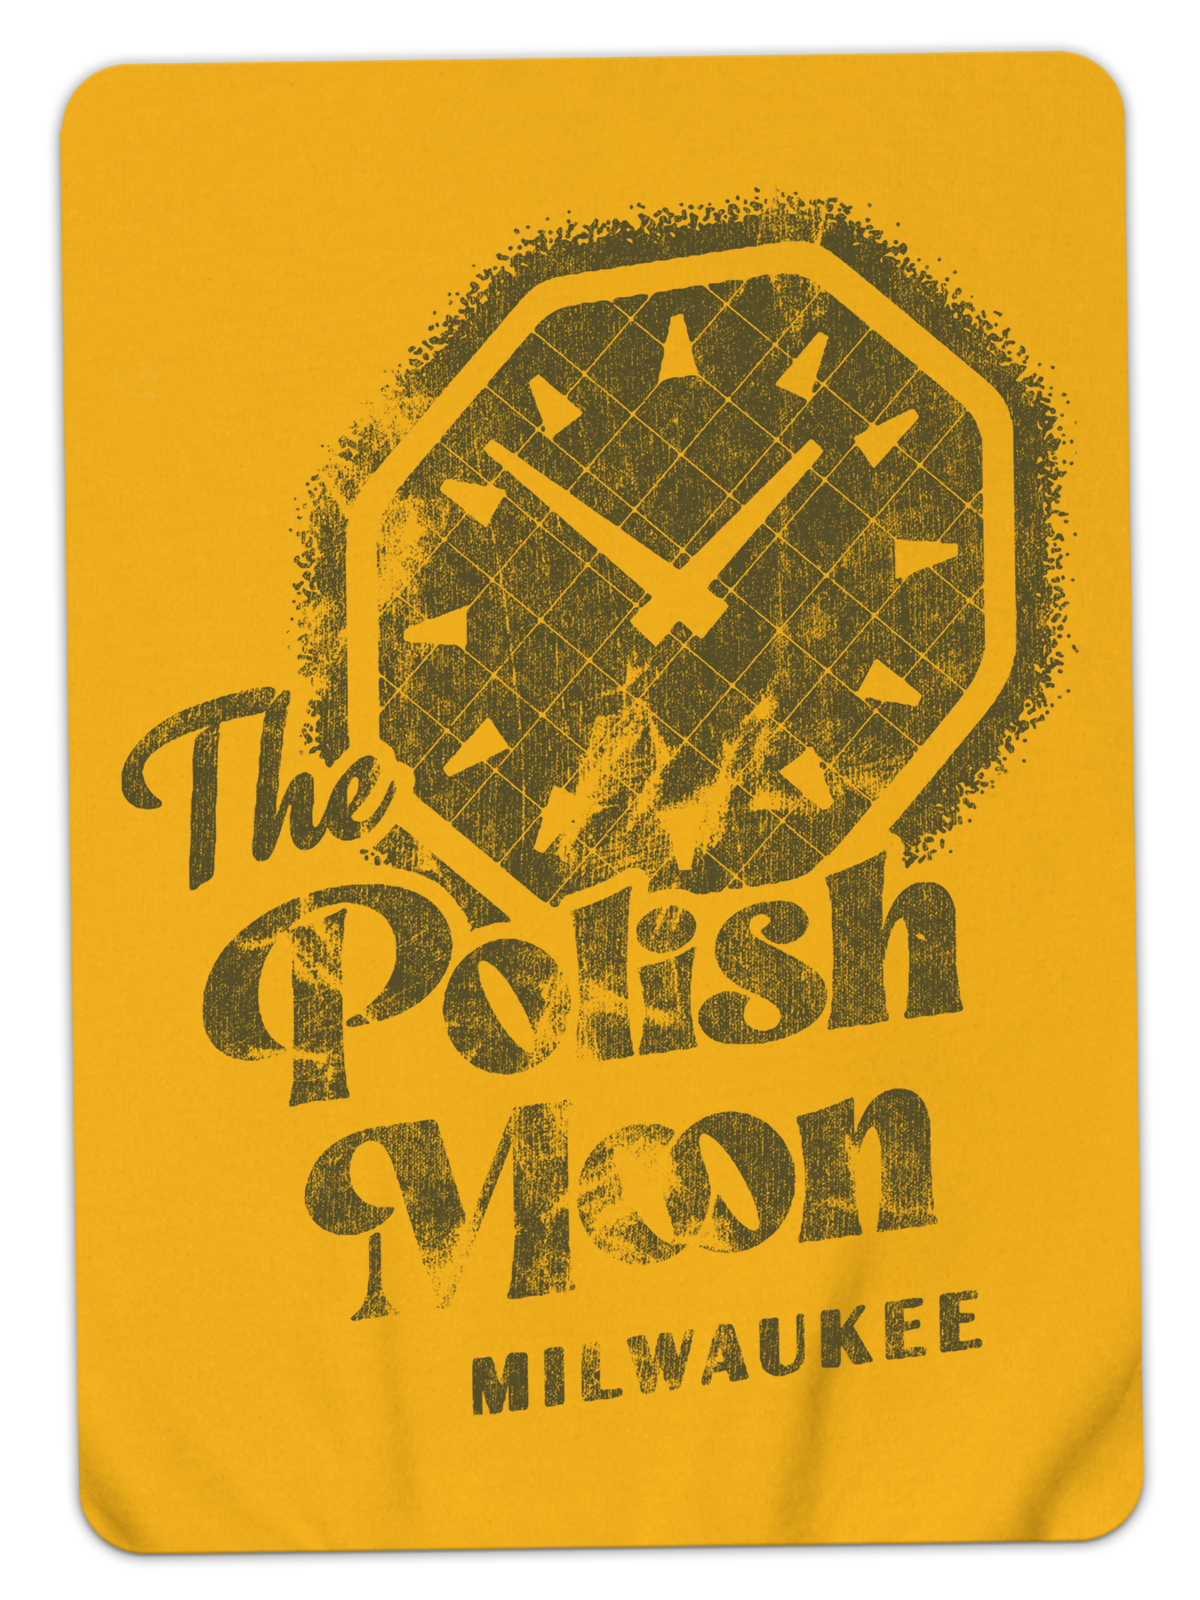 The Polish Moon, Milwaukee Adult Crewneck Sweatshirt